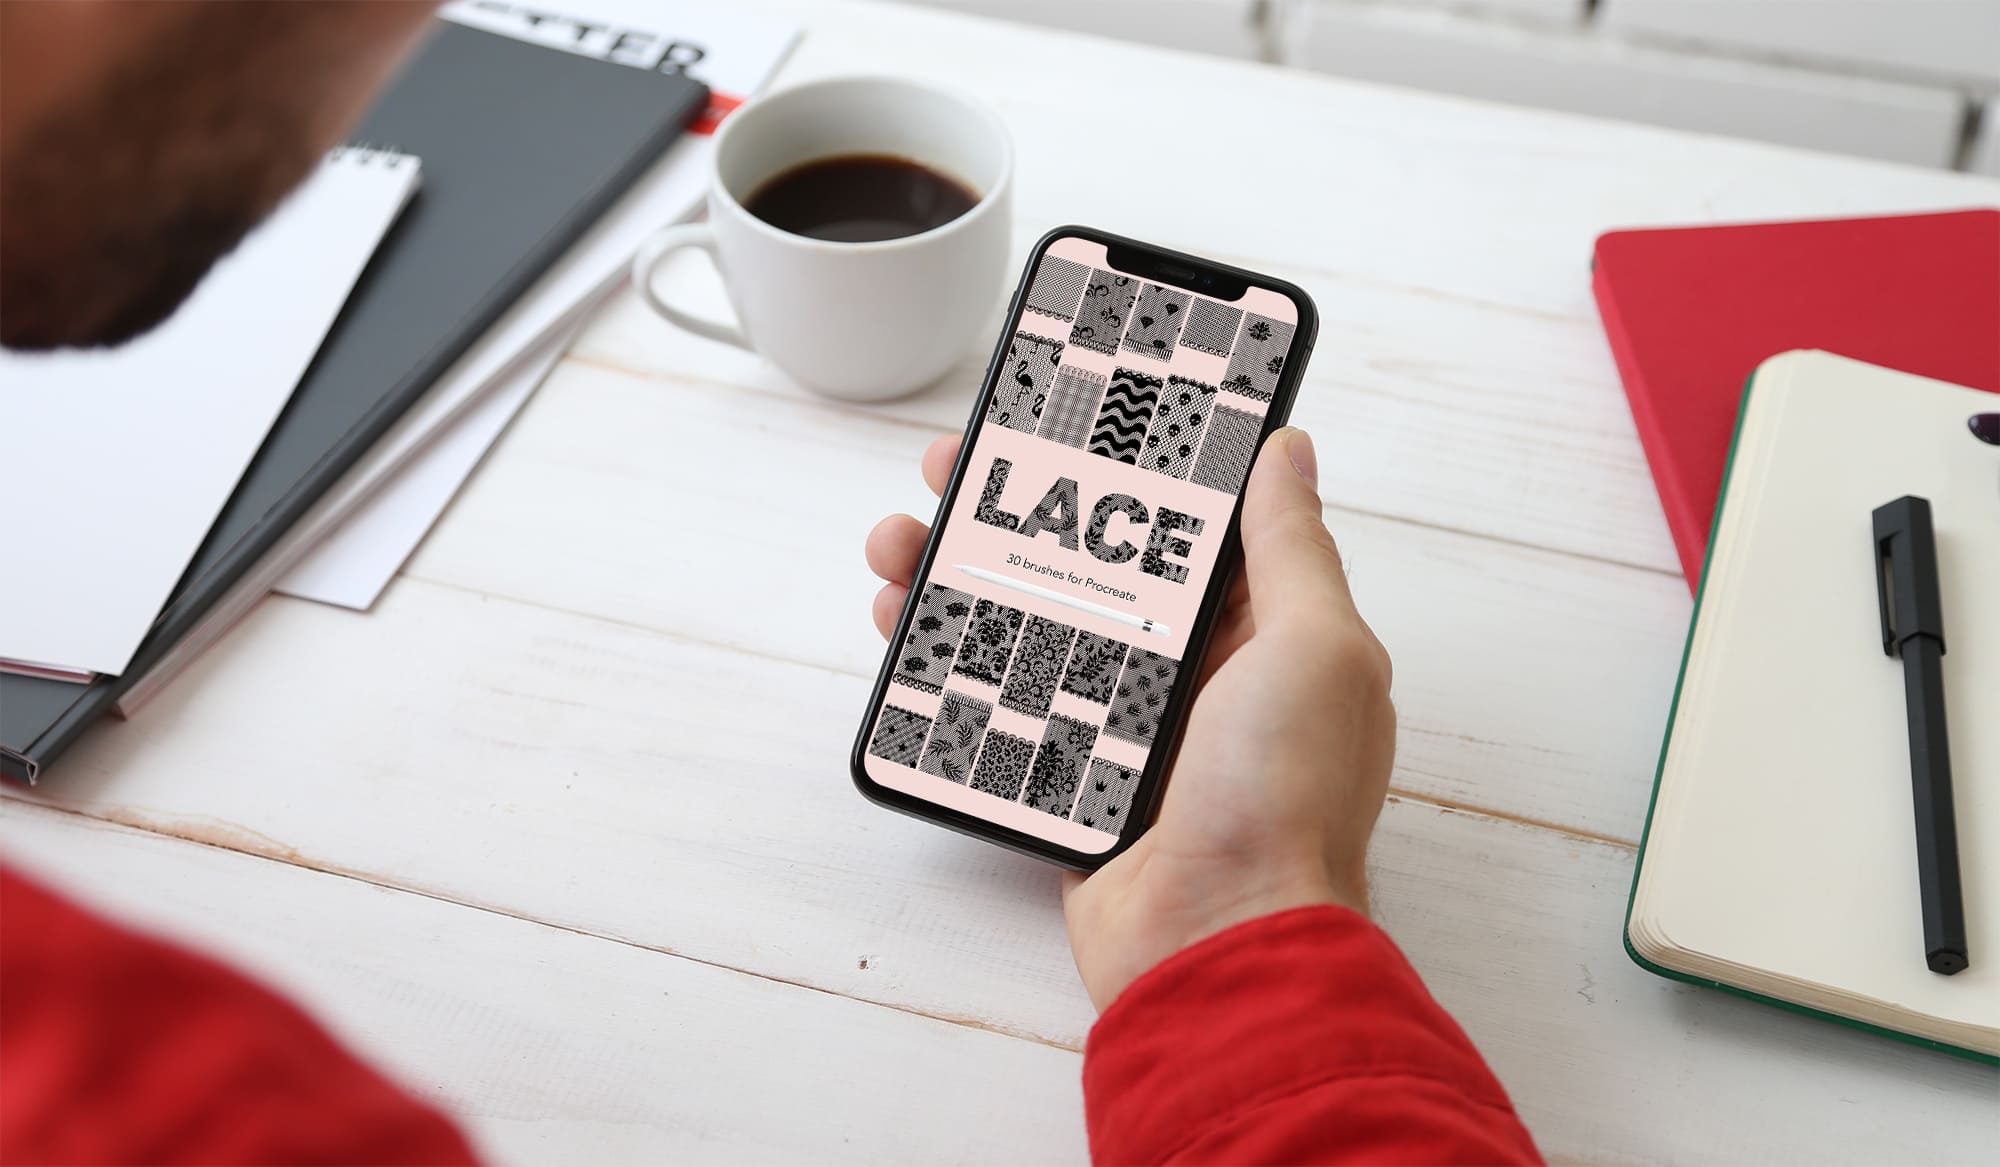 Lace Pattern Procreate Brushes on the IPhone Mockup.